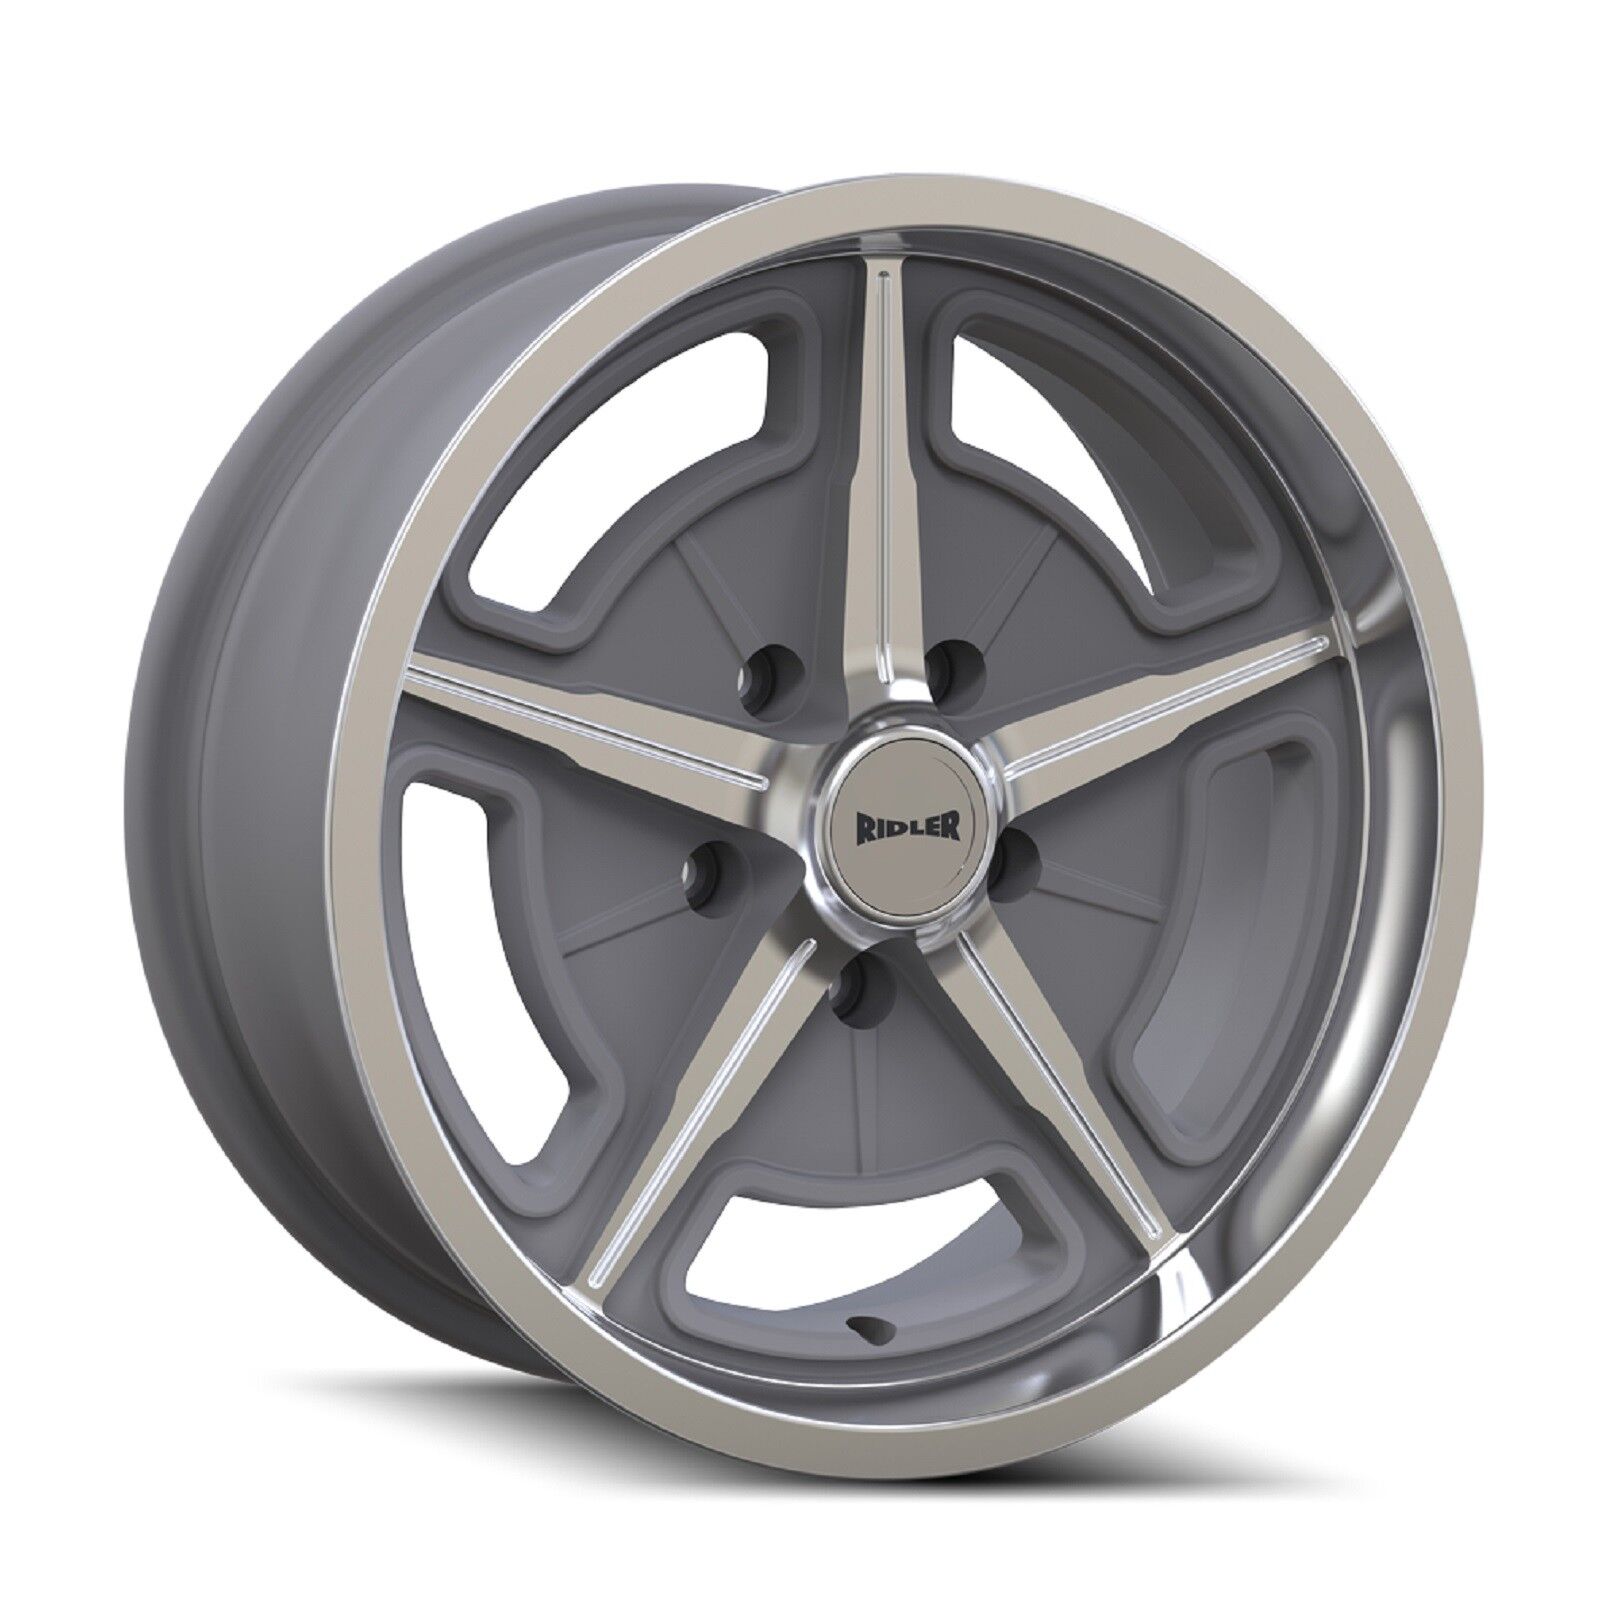 CPP Ridler 605 wheels 18x9.5 fits: BUICK REGAL SKYLARK GS GSX